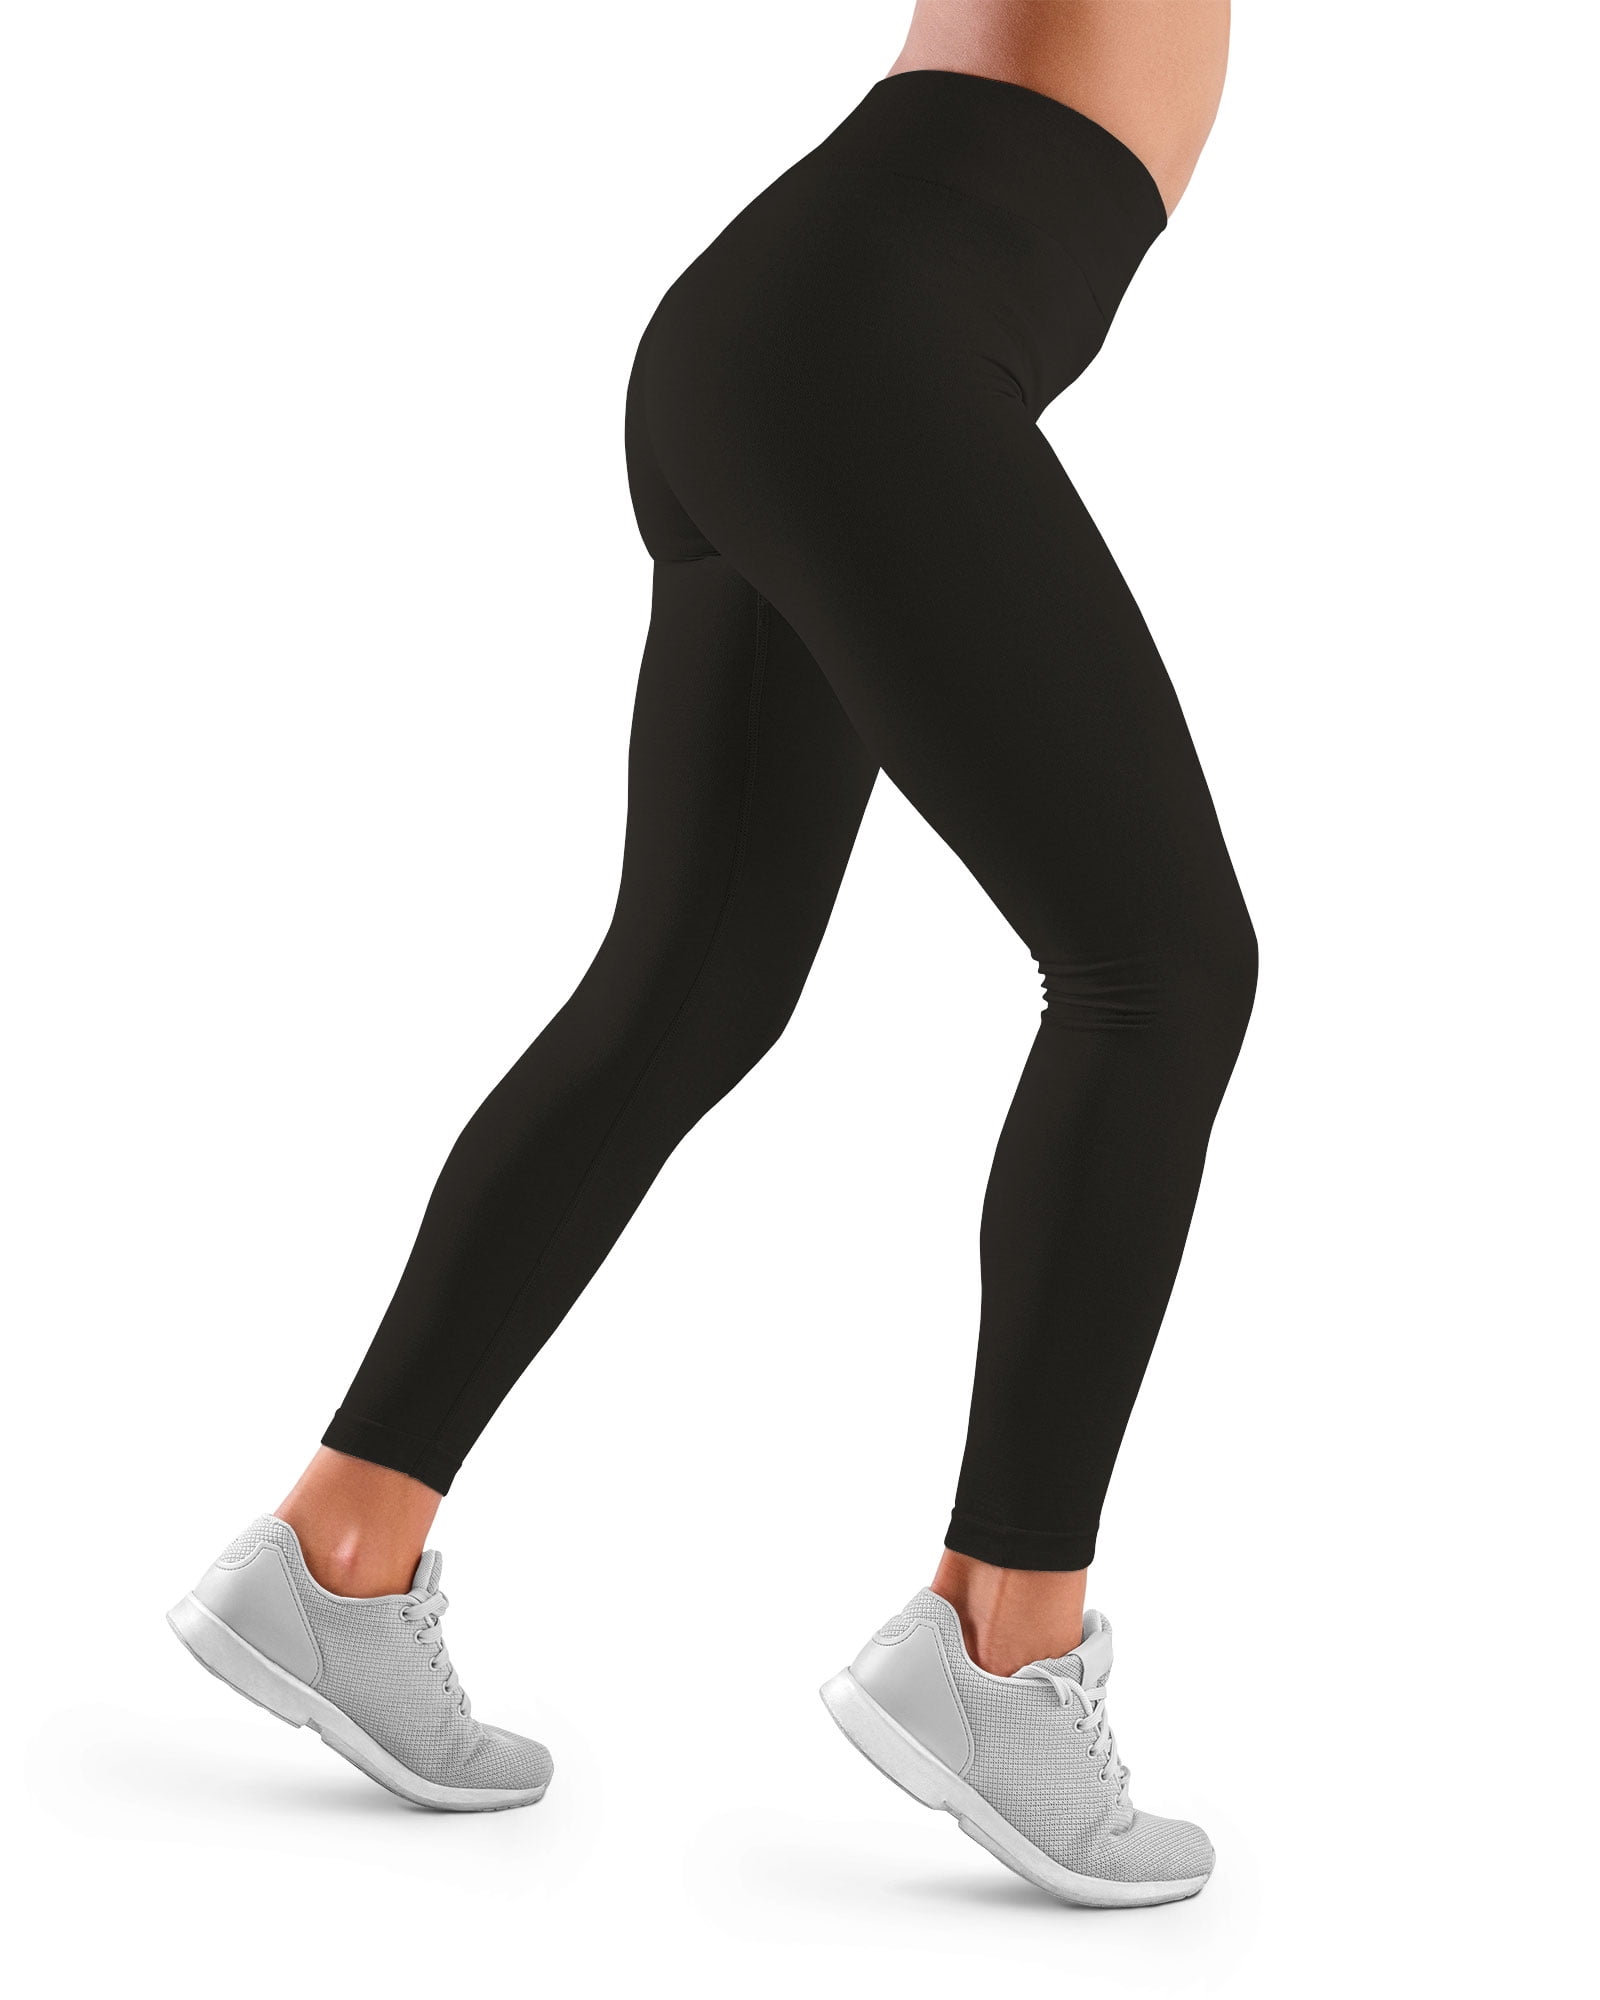 Farmacell 609H Everyday Active (Black, M) Sports Leggings Women